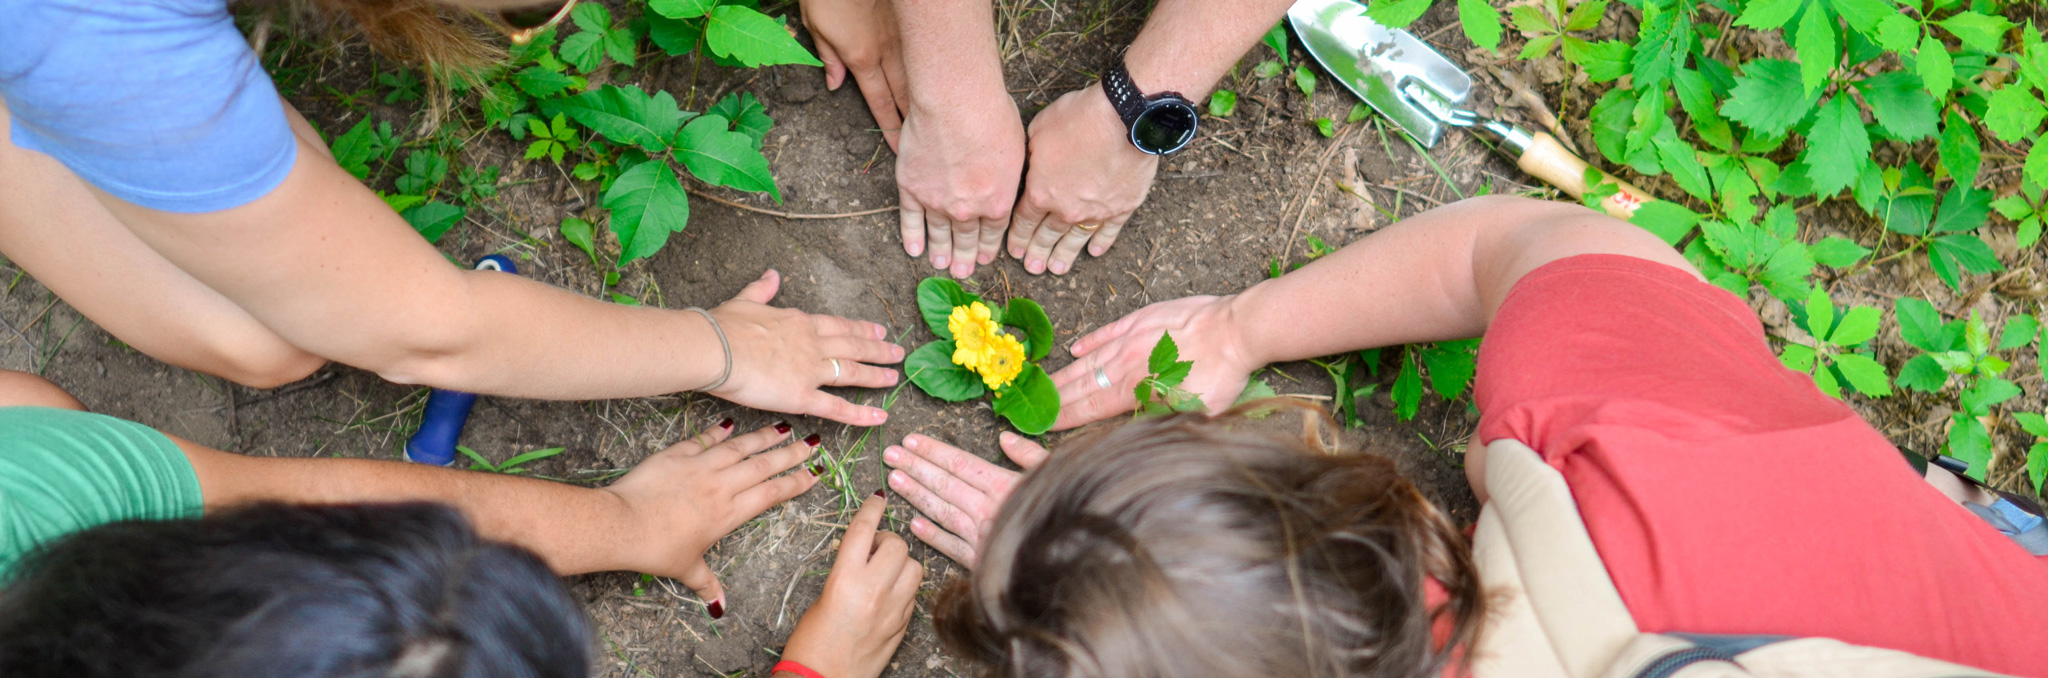 Peoples hands around a flower planted in garden. Photo by Element5 Digital on Unsplash